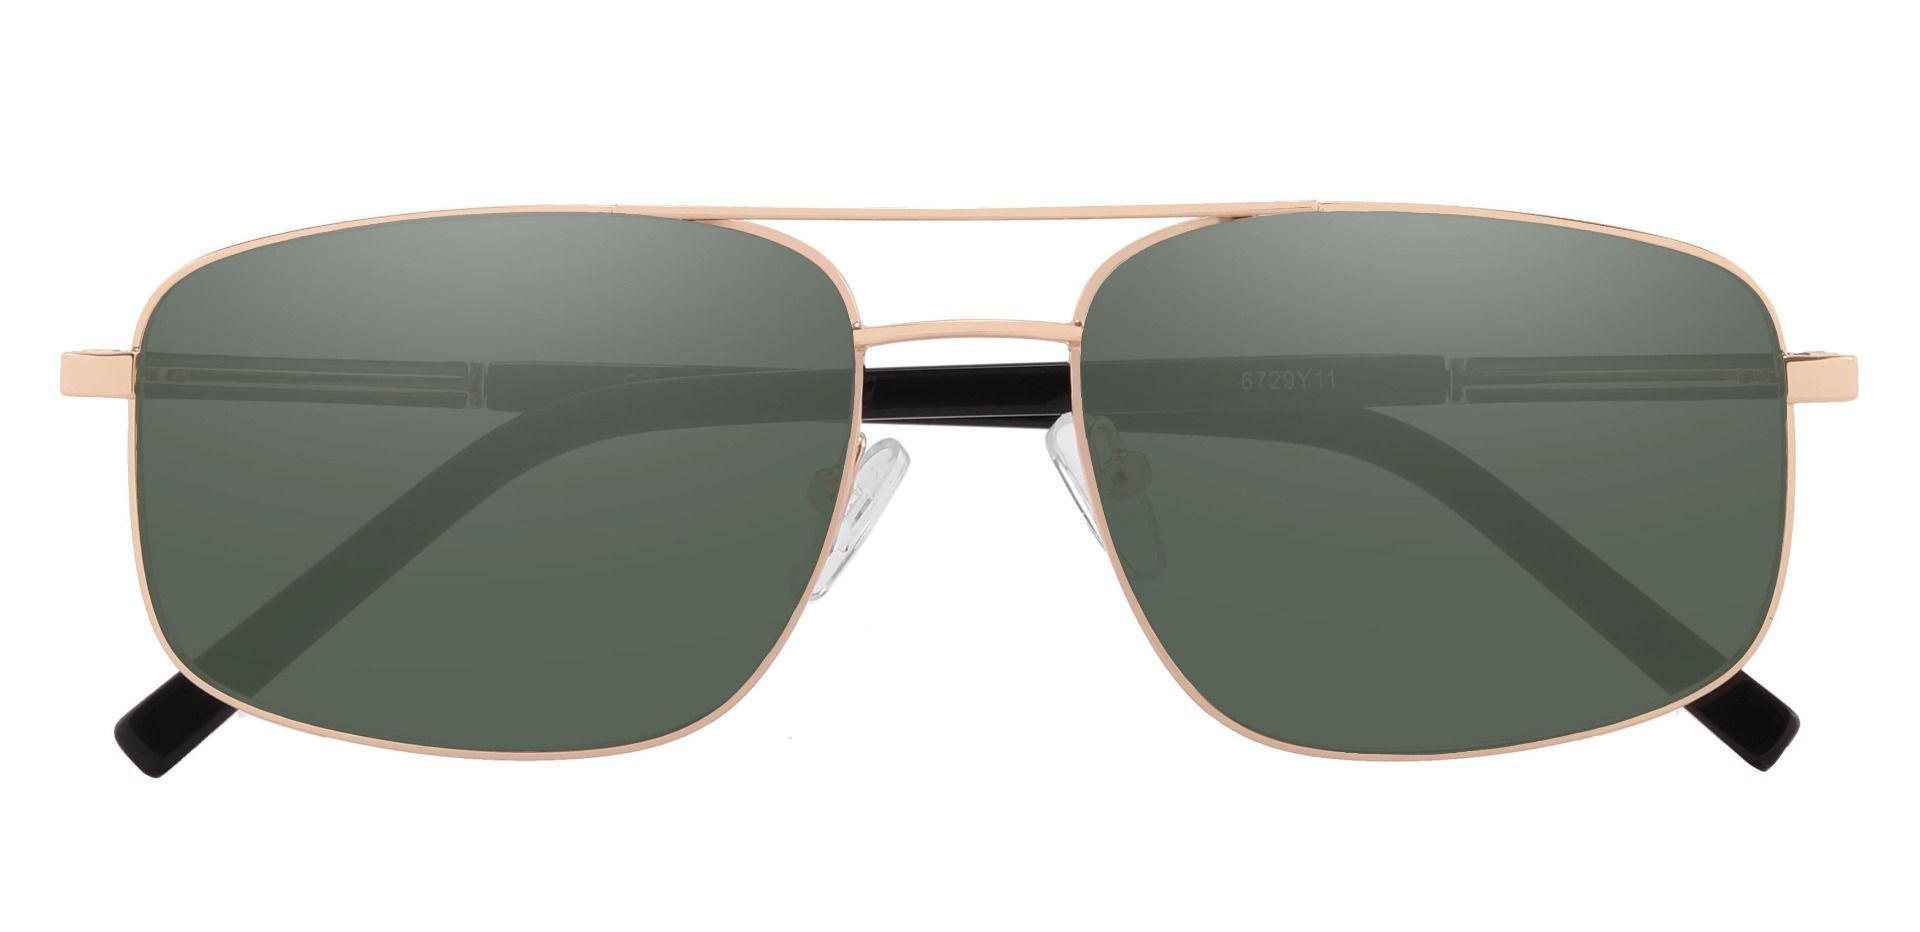 Davenport Aviator Prescription Sunglasses - Gold Frame With Green Lenses